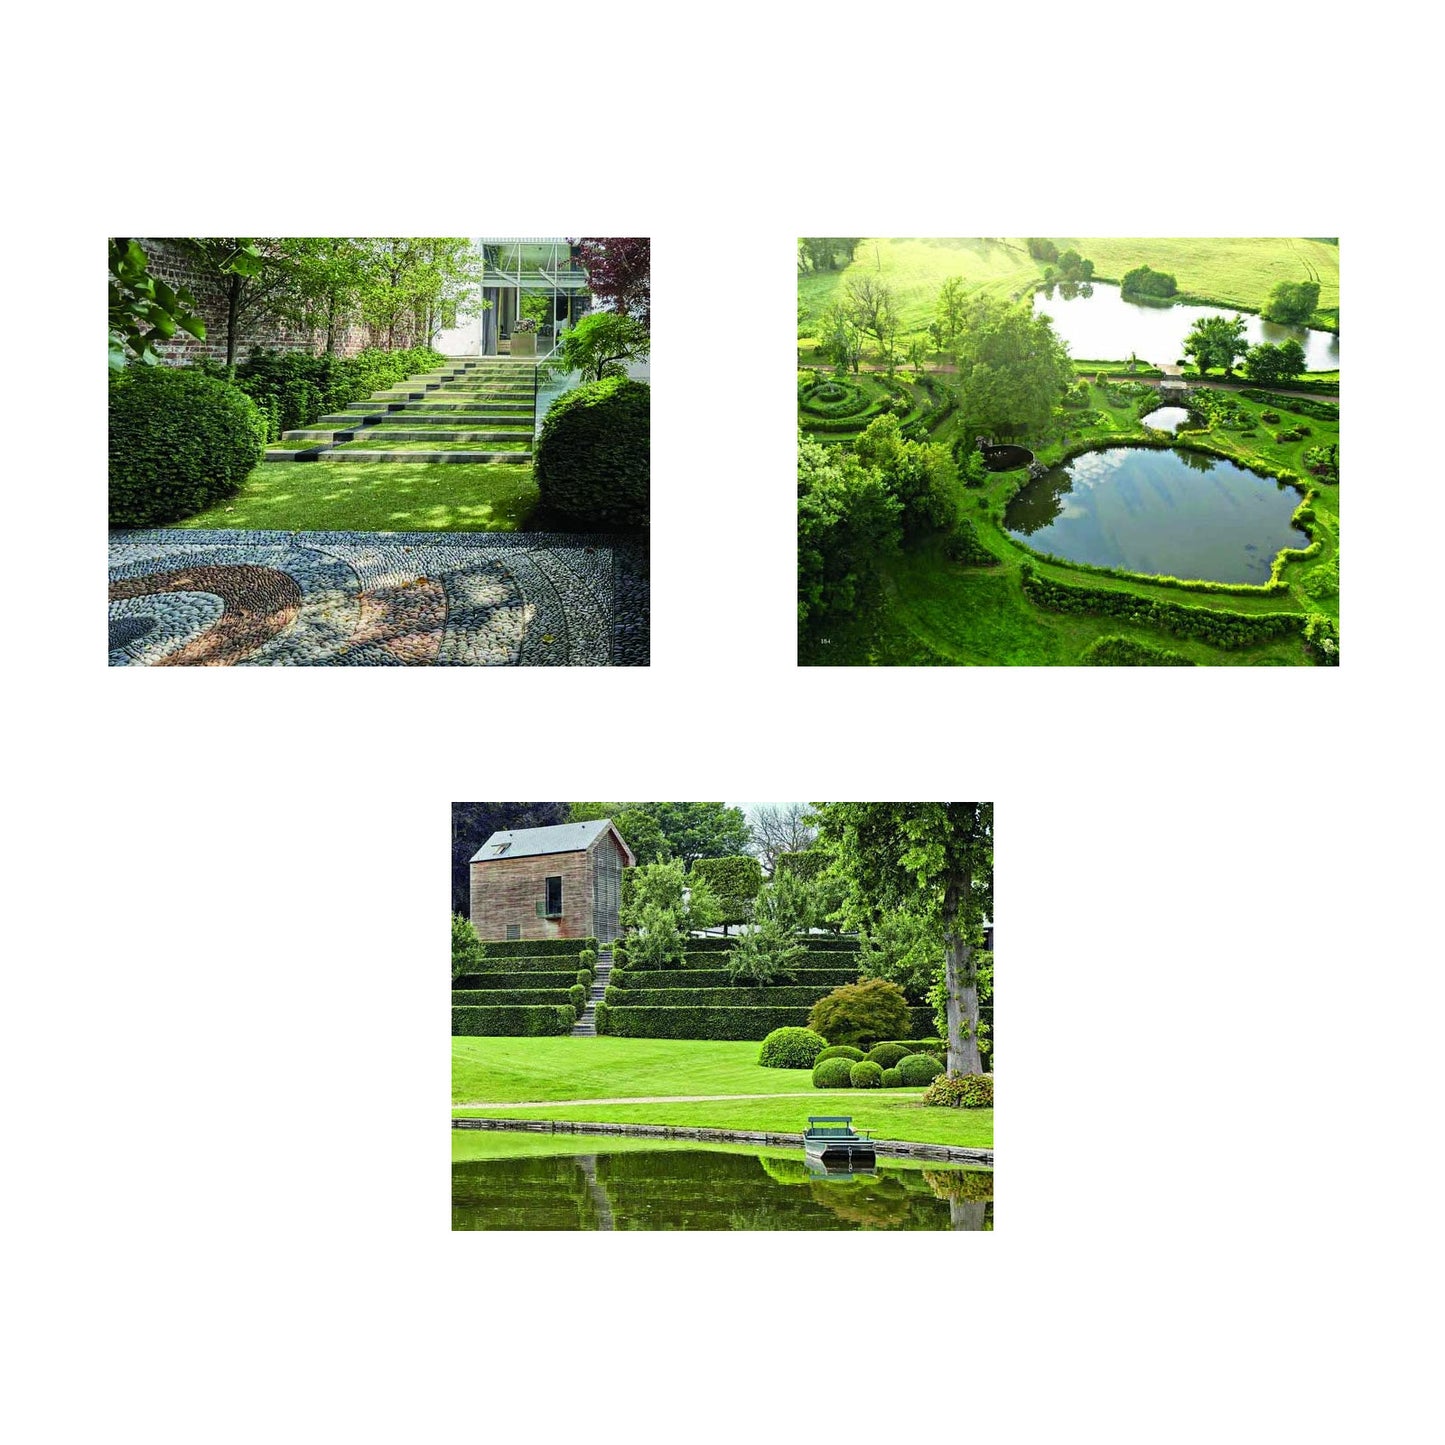 Michel Delvosalle: Garden & Landscape Architect